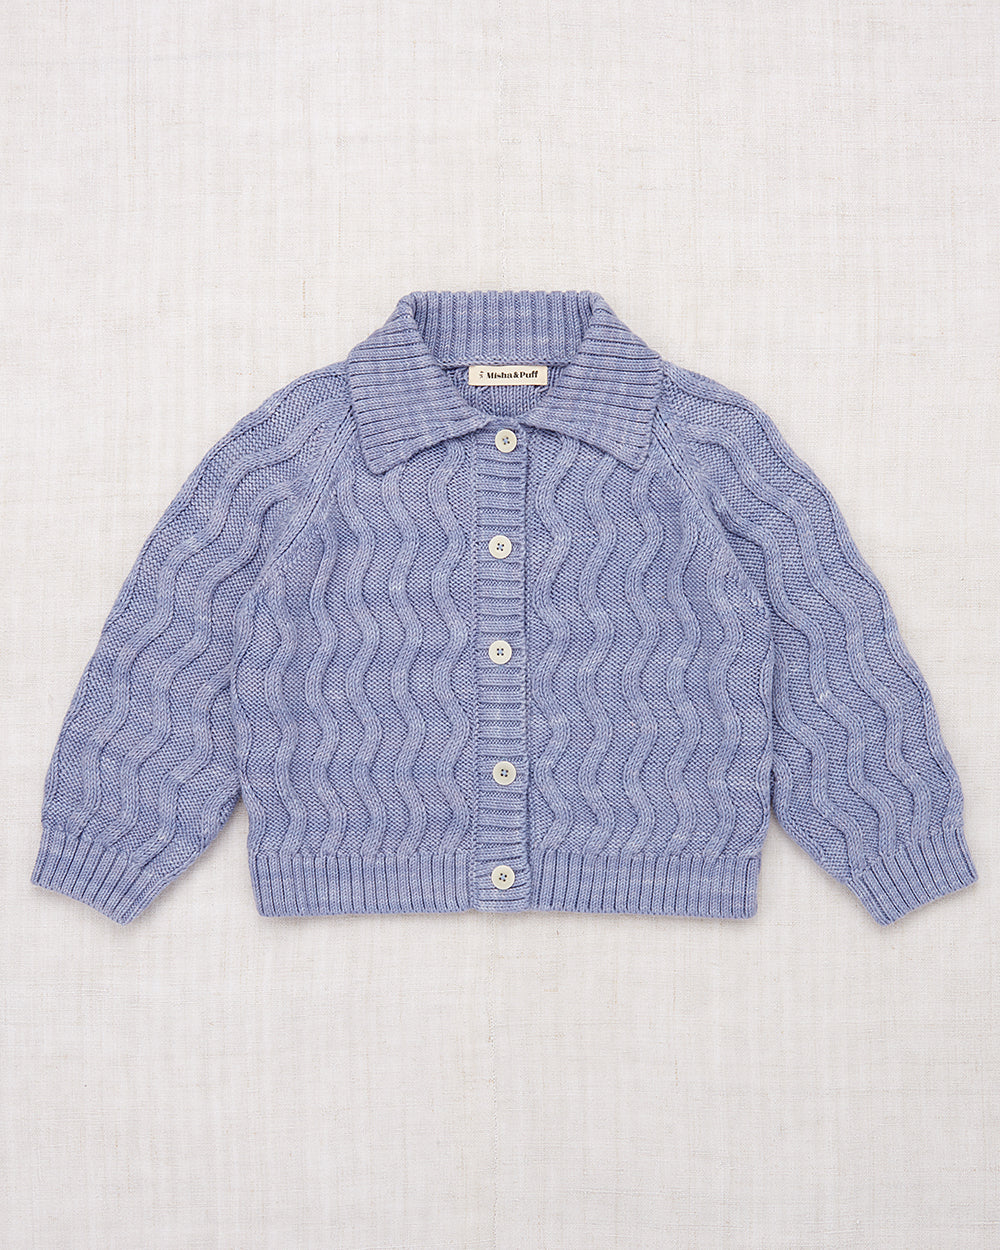 Child - Sweaters & Cardigans - Misha & Puff